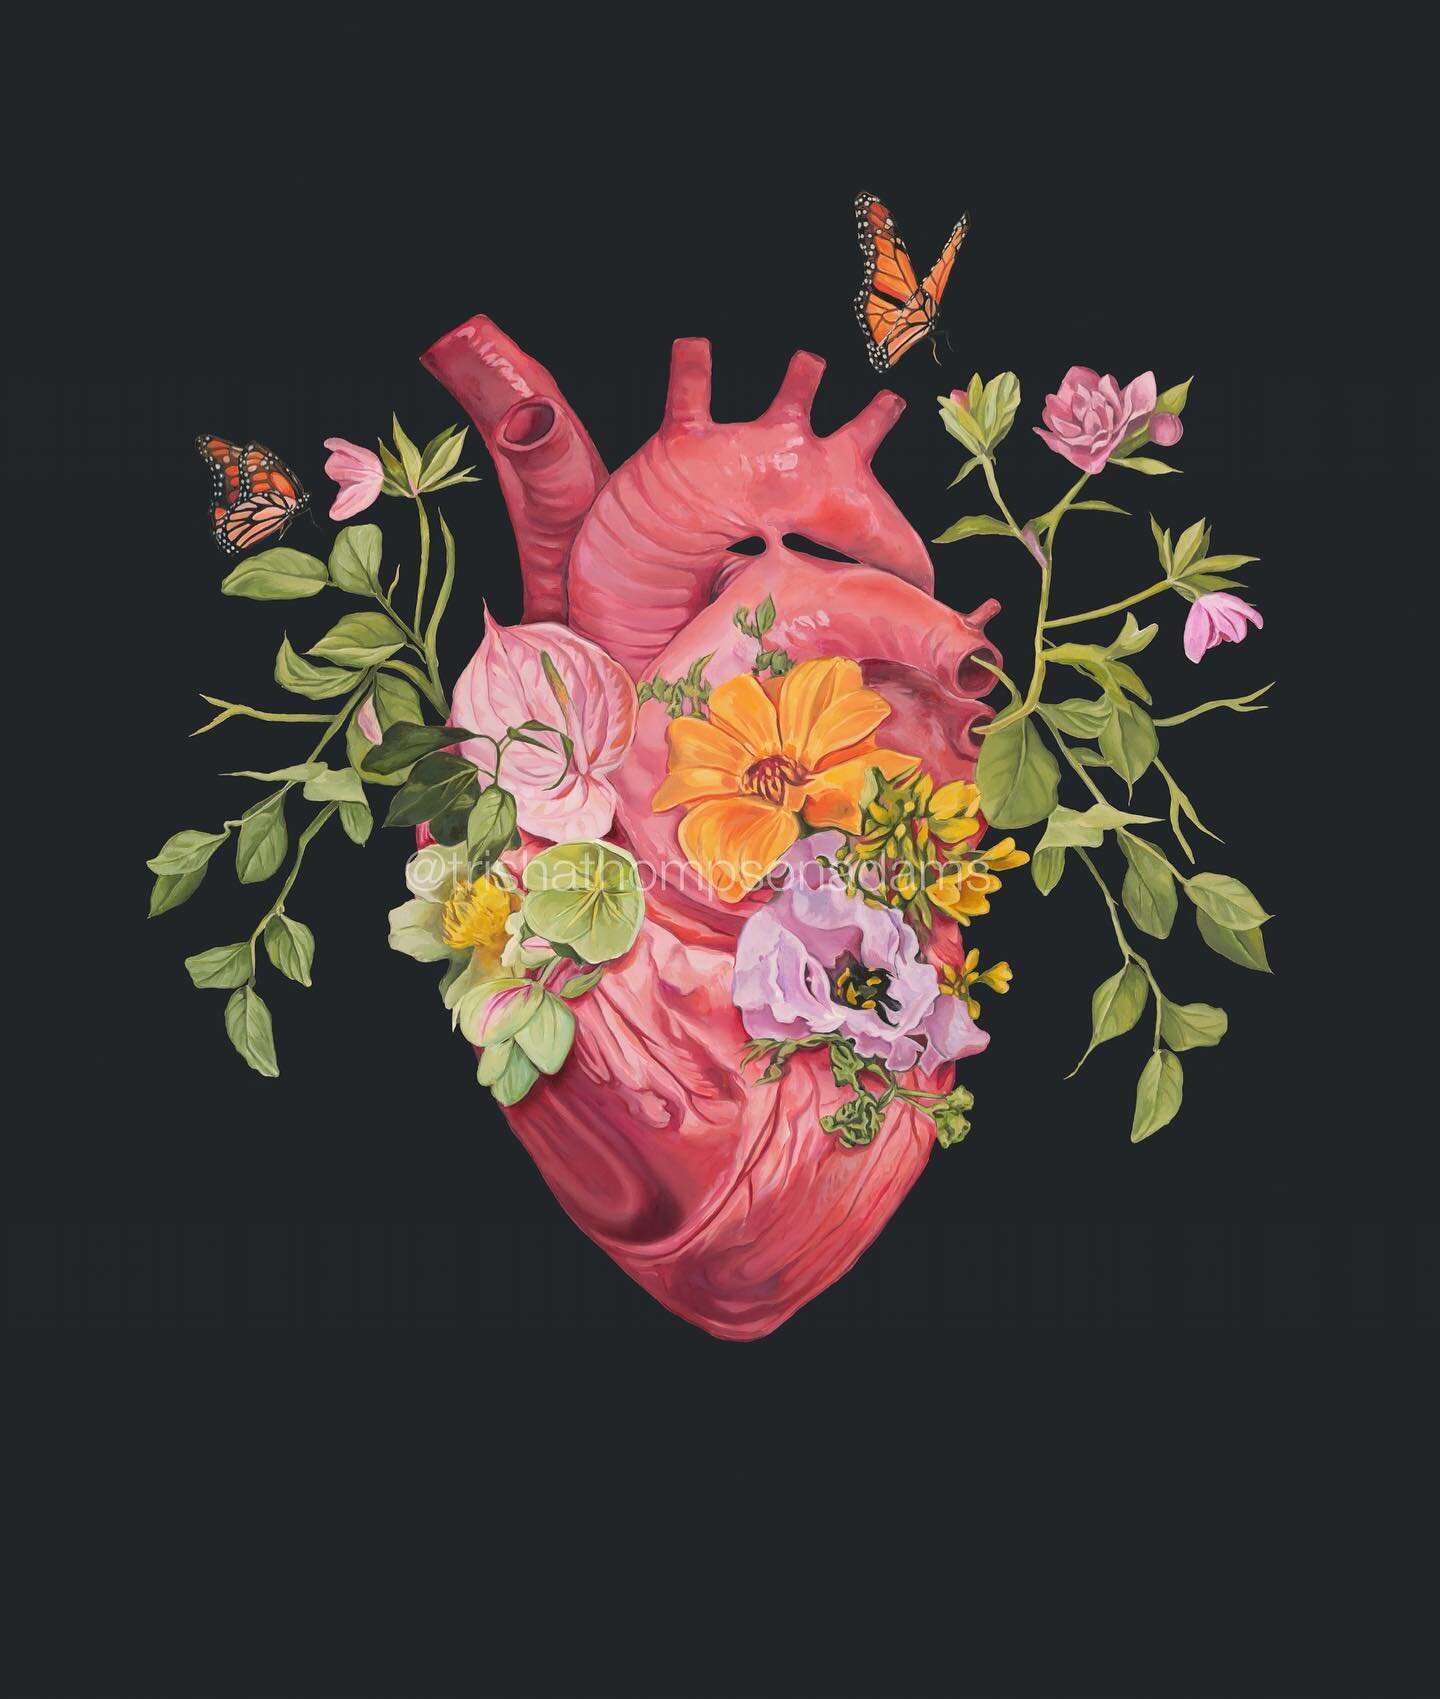 ✨New✨ Flutter Heart, oil painting (and procreate background) 2022. Prints now available 💗

#oilpainting #anatomy #🫀 #floralanatomy #anatomicalheart #beautifulbizarre #humananatomy #garden #cardiology #heartart